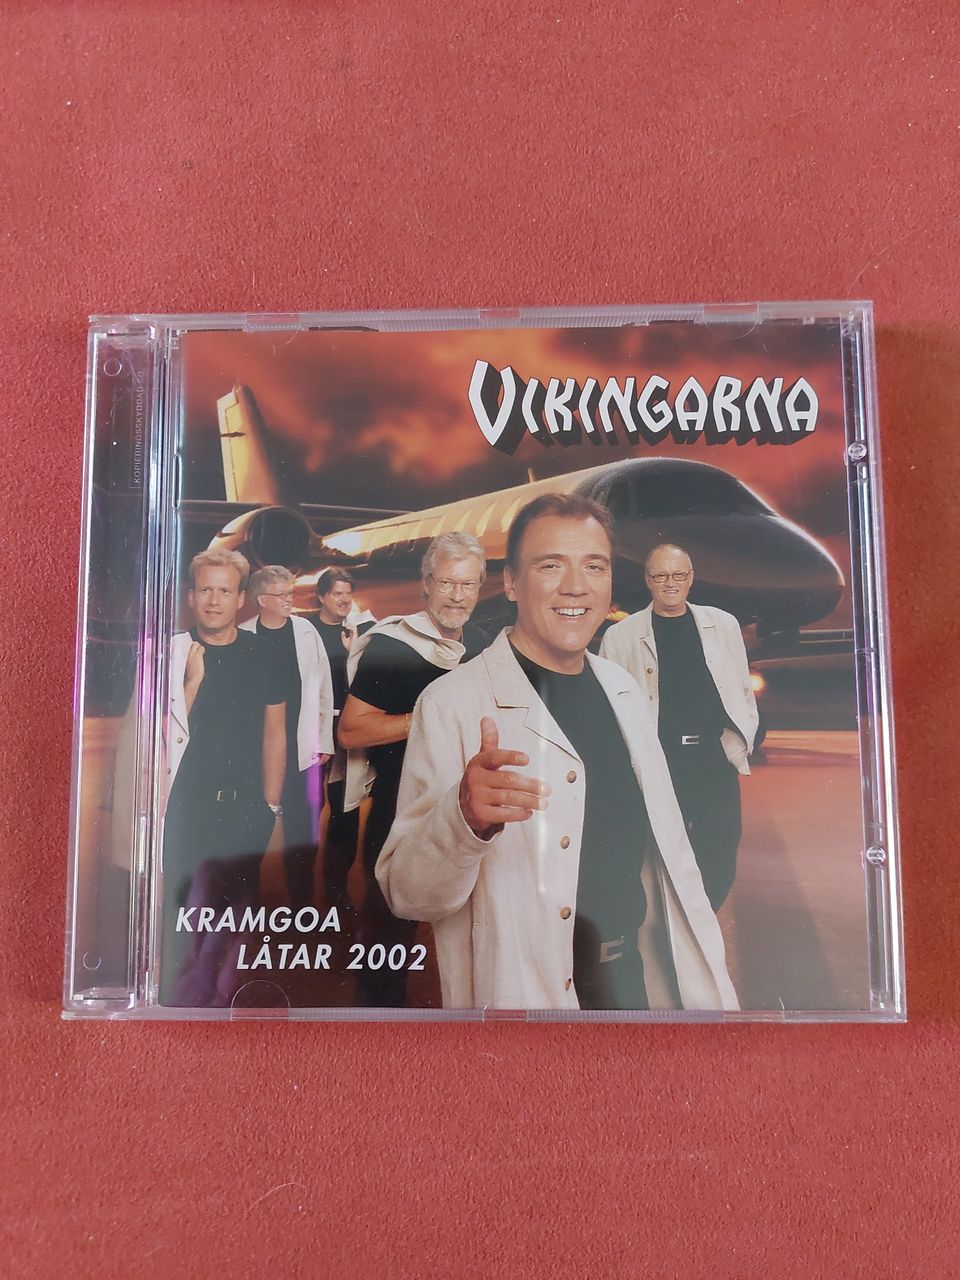 Vikingarna Kramgoa låtar 2002 -CD